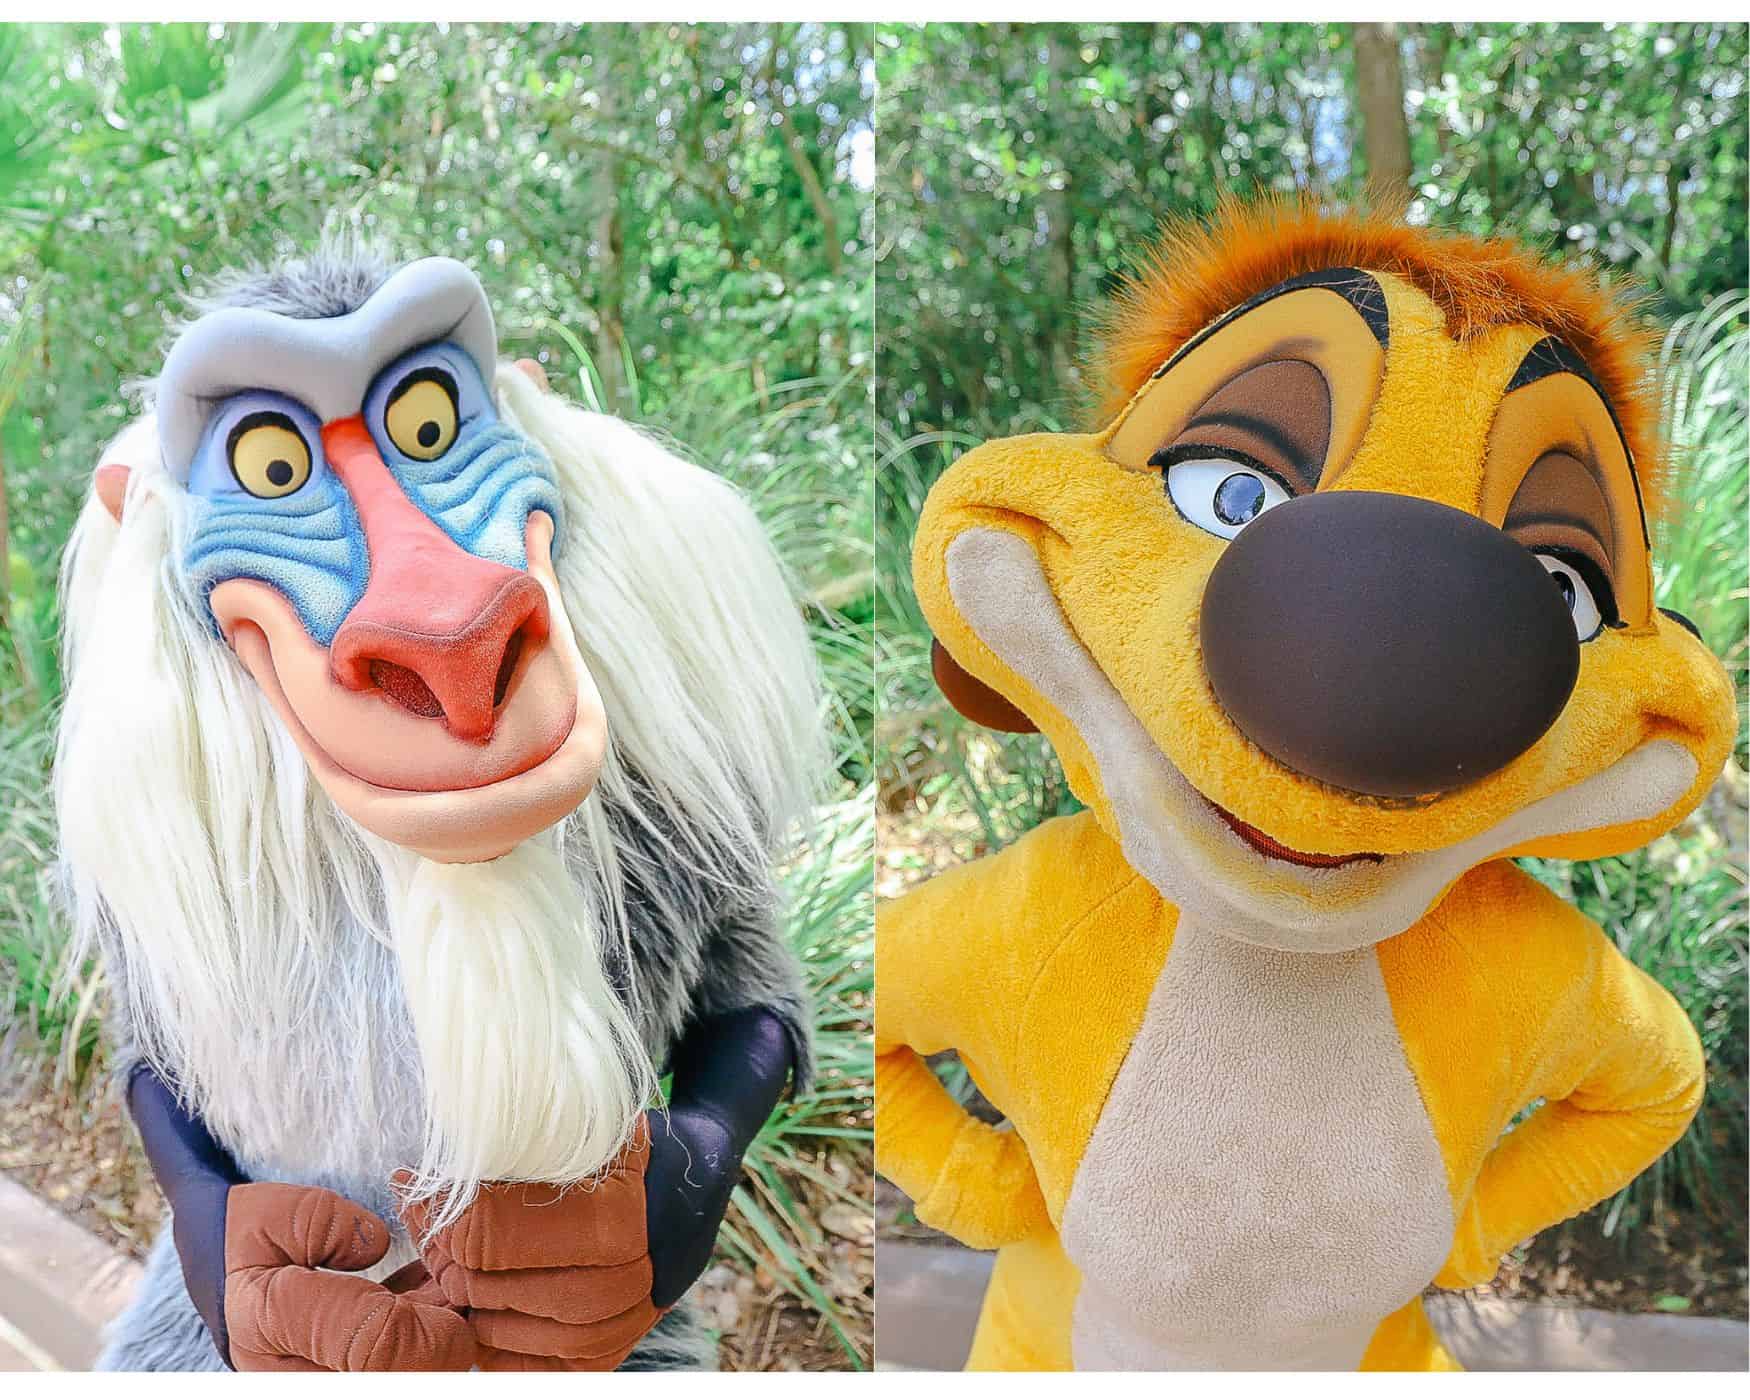 Timon and Rafiki at Disney's Animal Kingdom